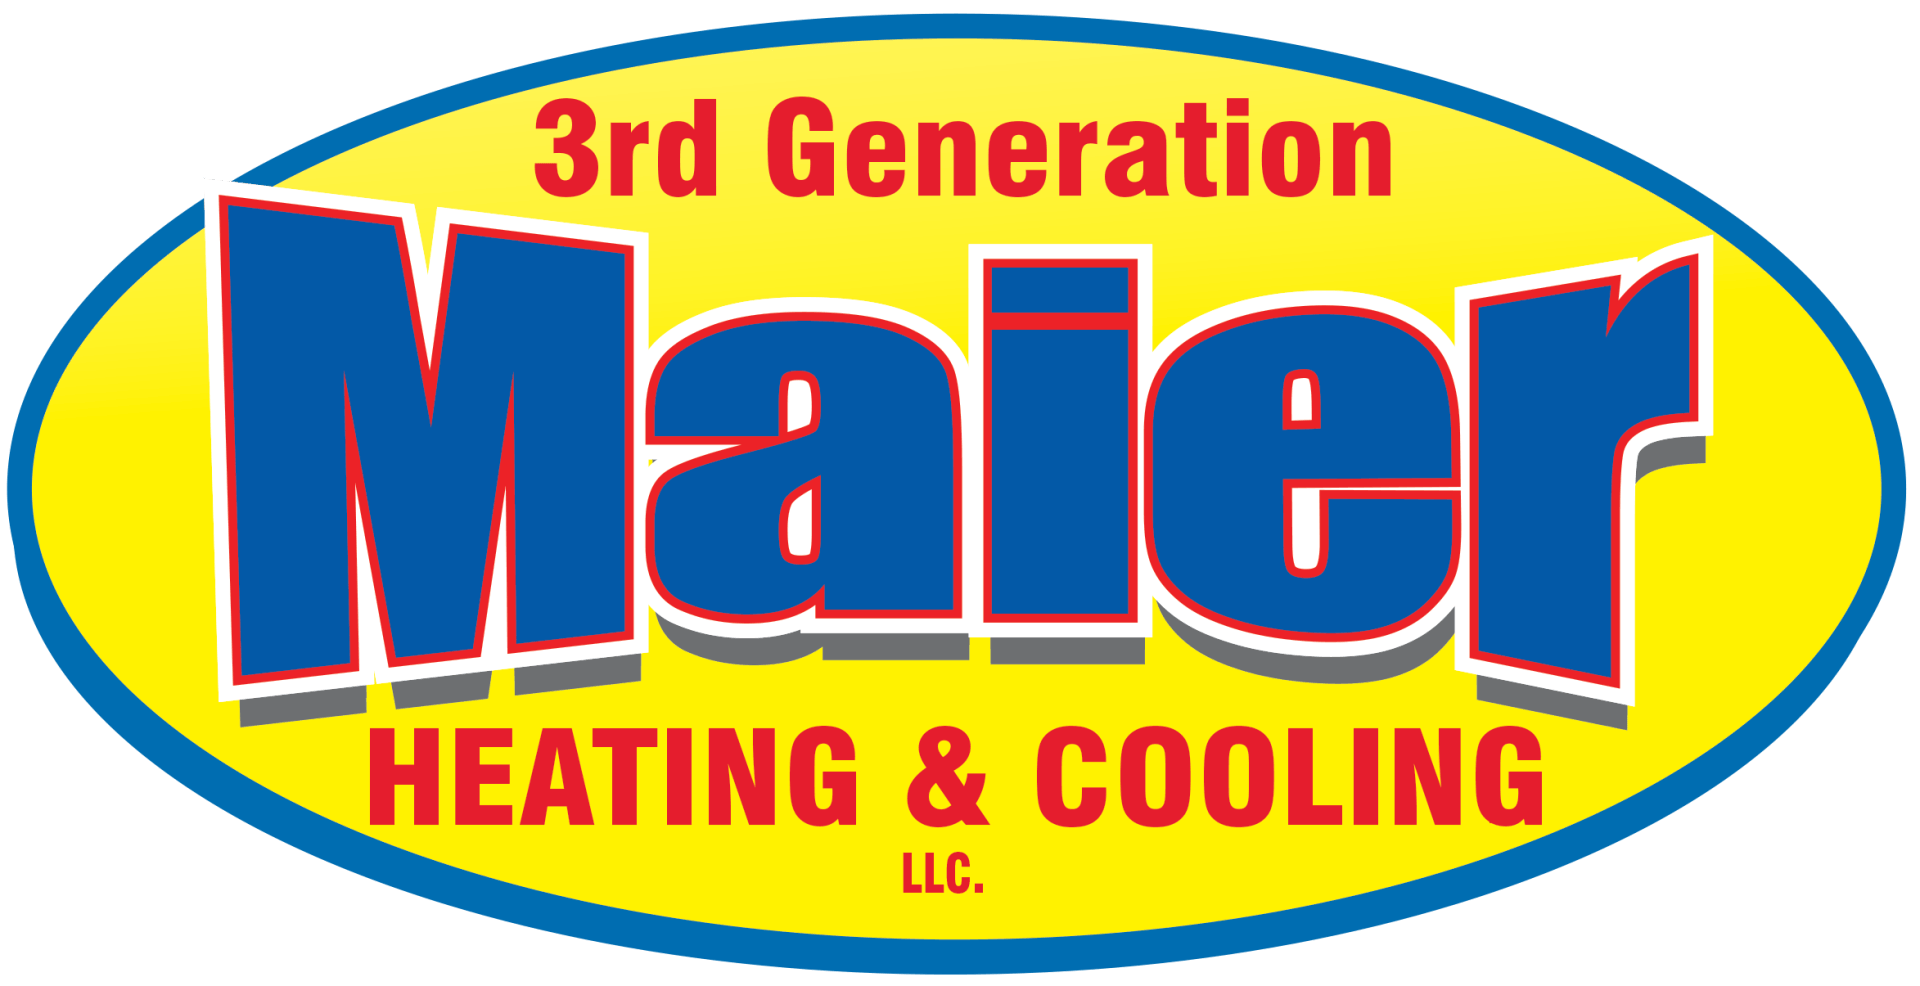 Maier Heating & Cooling logo